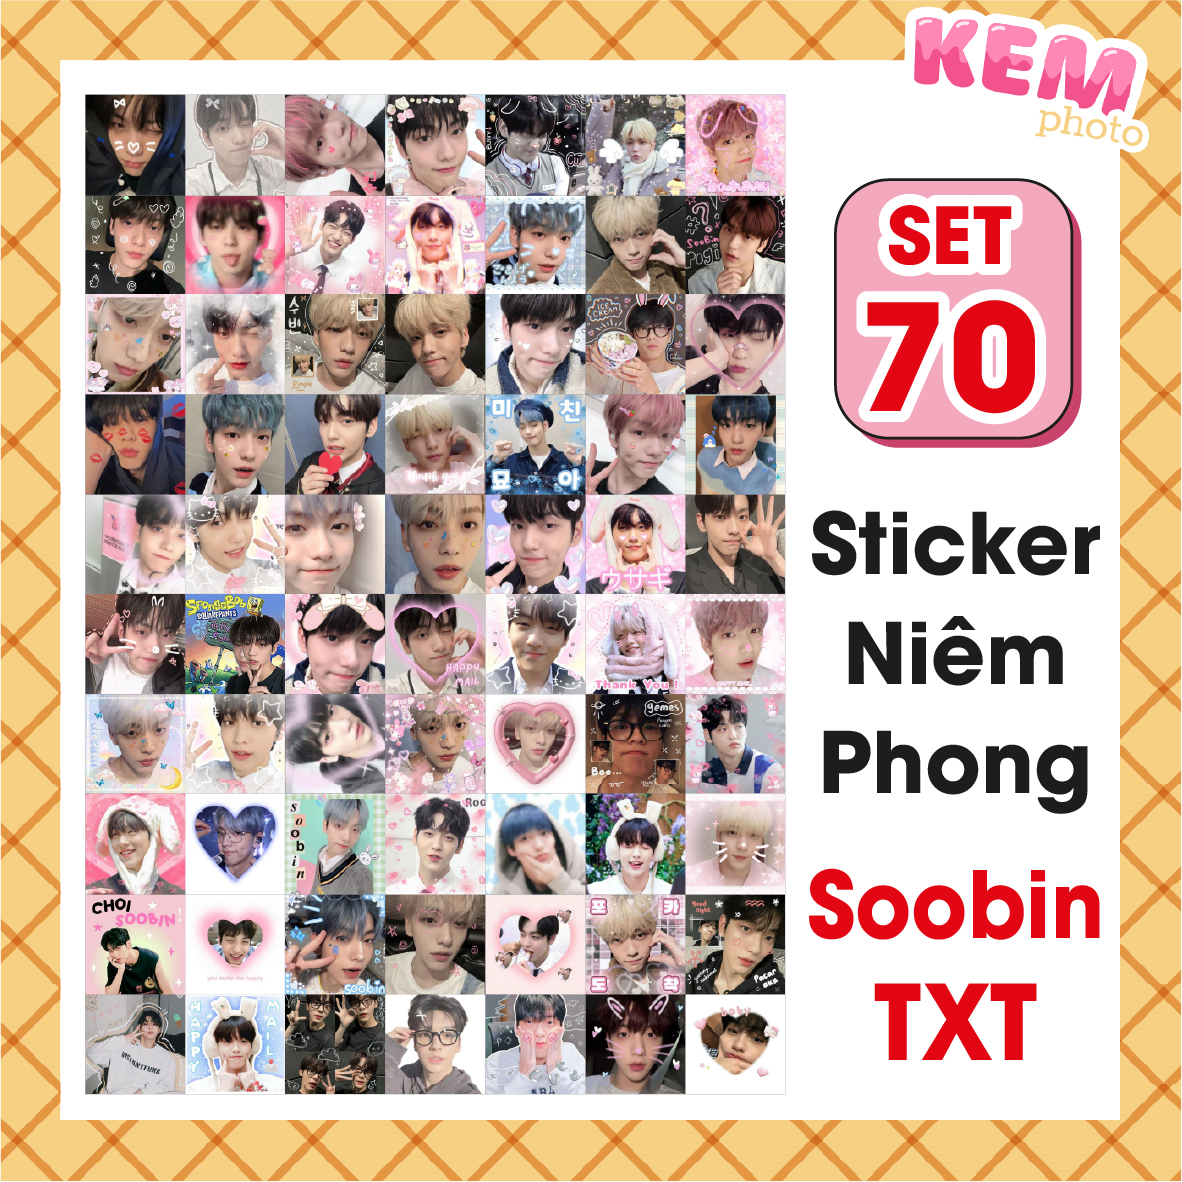 SET 70 sticker niêm phong CHOI SOOBIN TXT